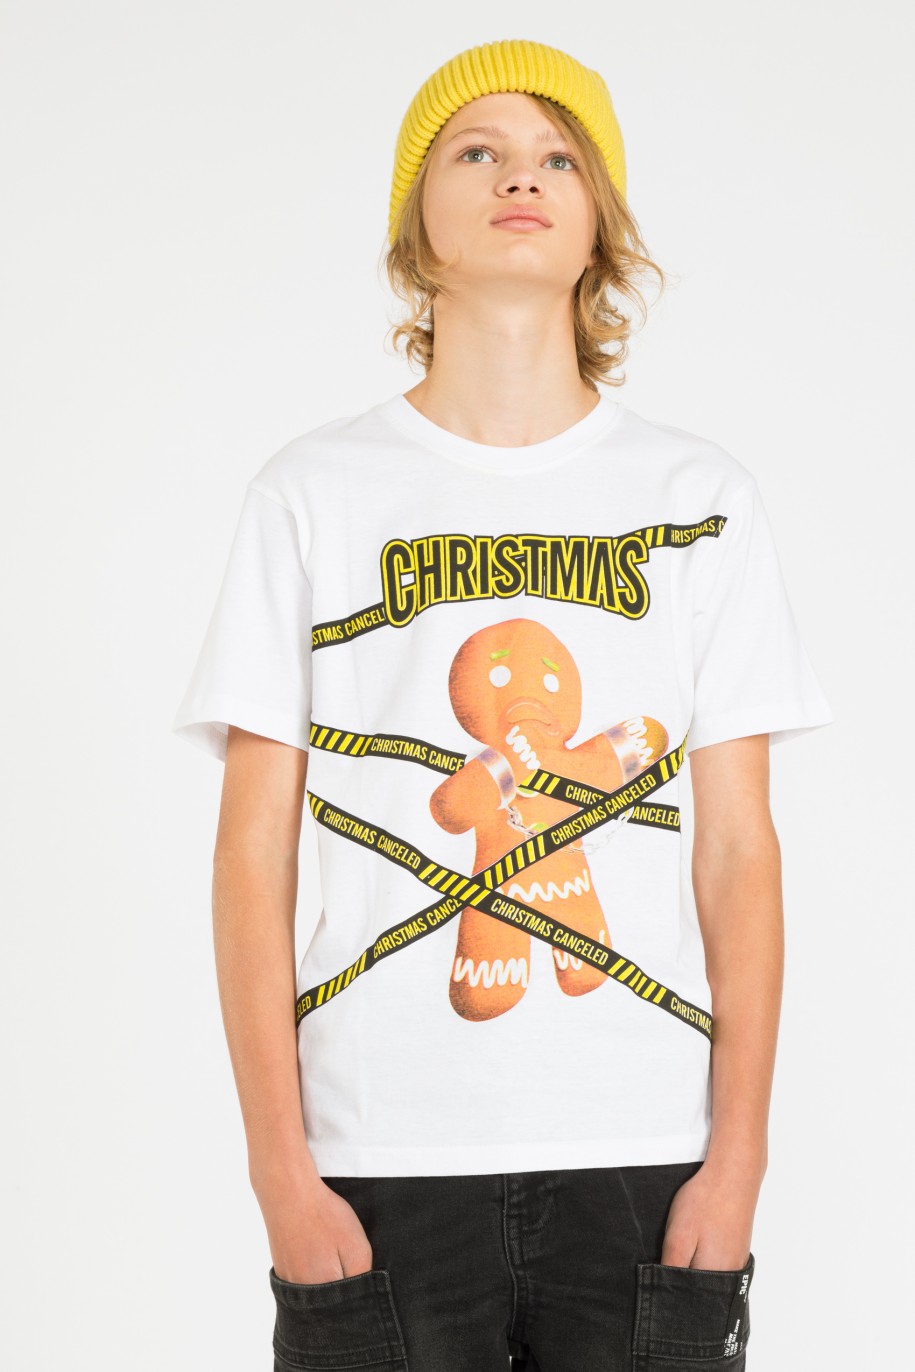 Biały t-shirt dla chłopaka CHRISTMAS CANCELED - 44896